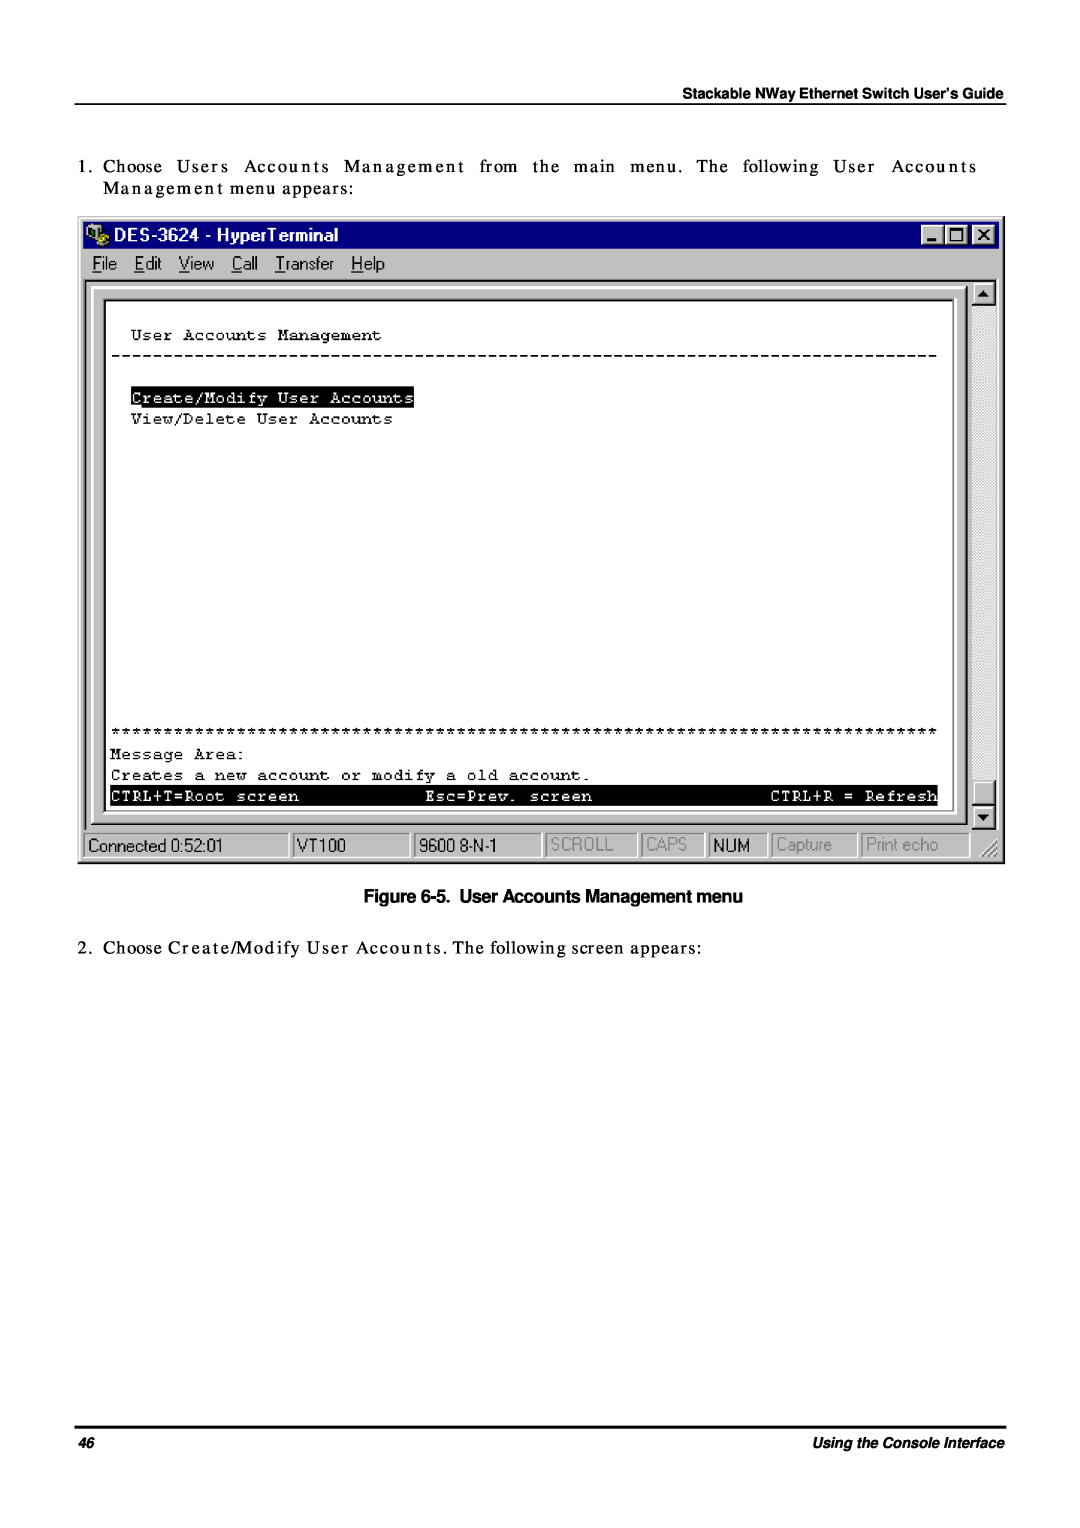 D-Link DES-3624 manual 5. User Accounts Management menu, Choose Create/Modify User Accounts. The following screen appears 